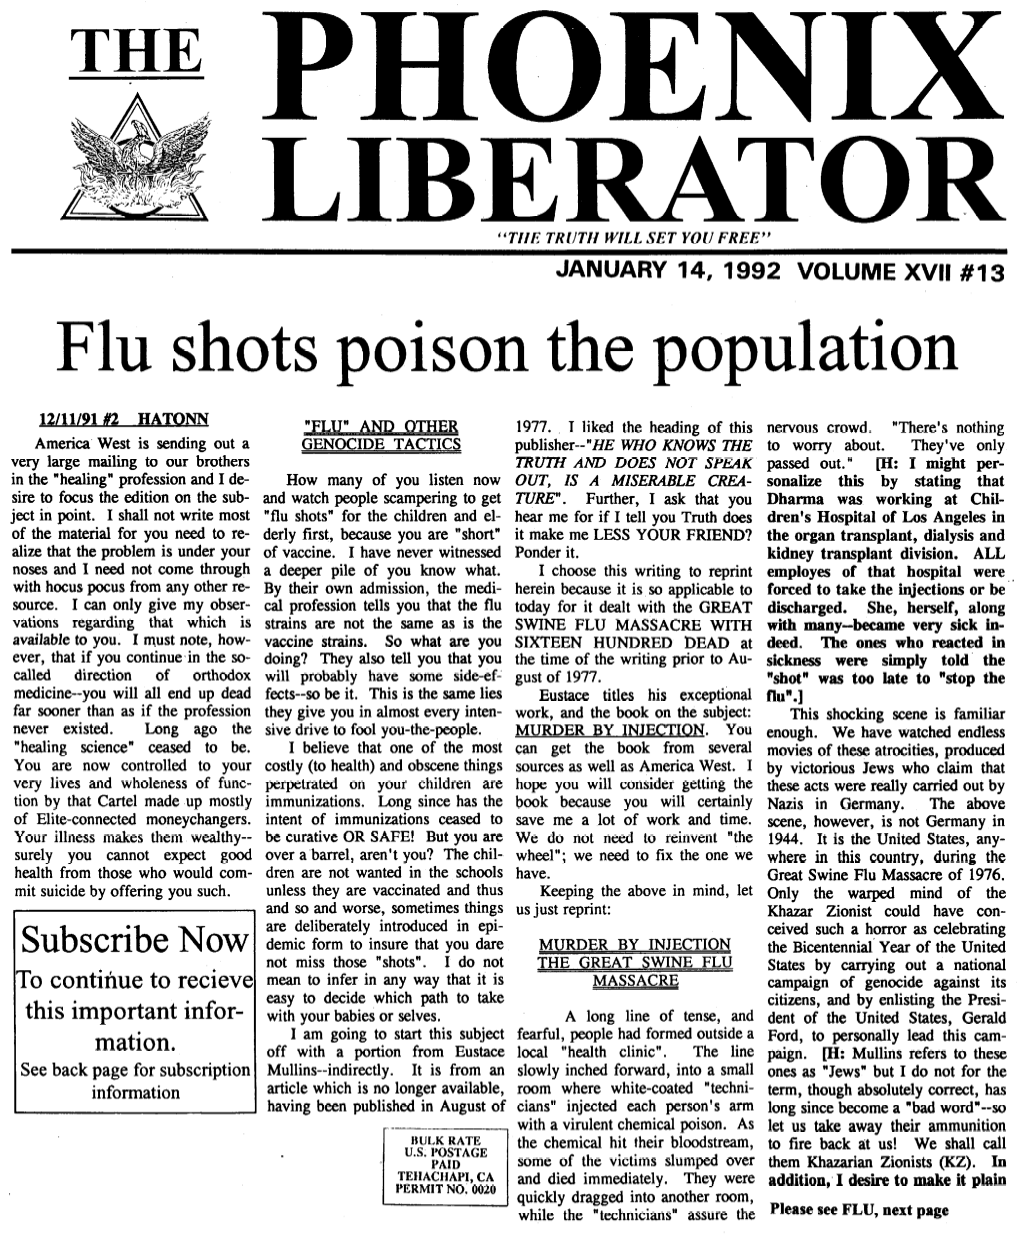 THE PHOENIX LIBERATOR, January 14, 1992